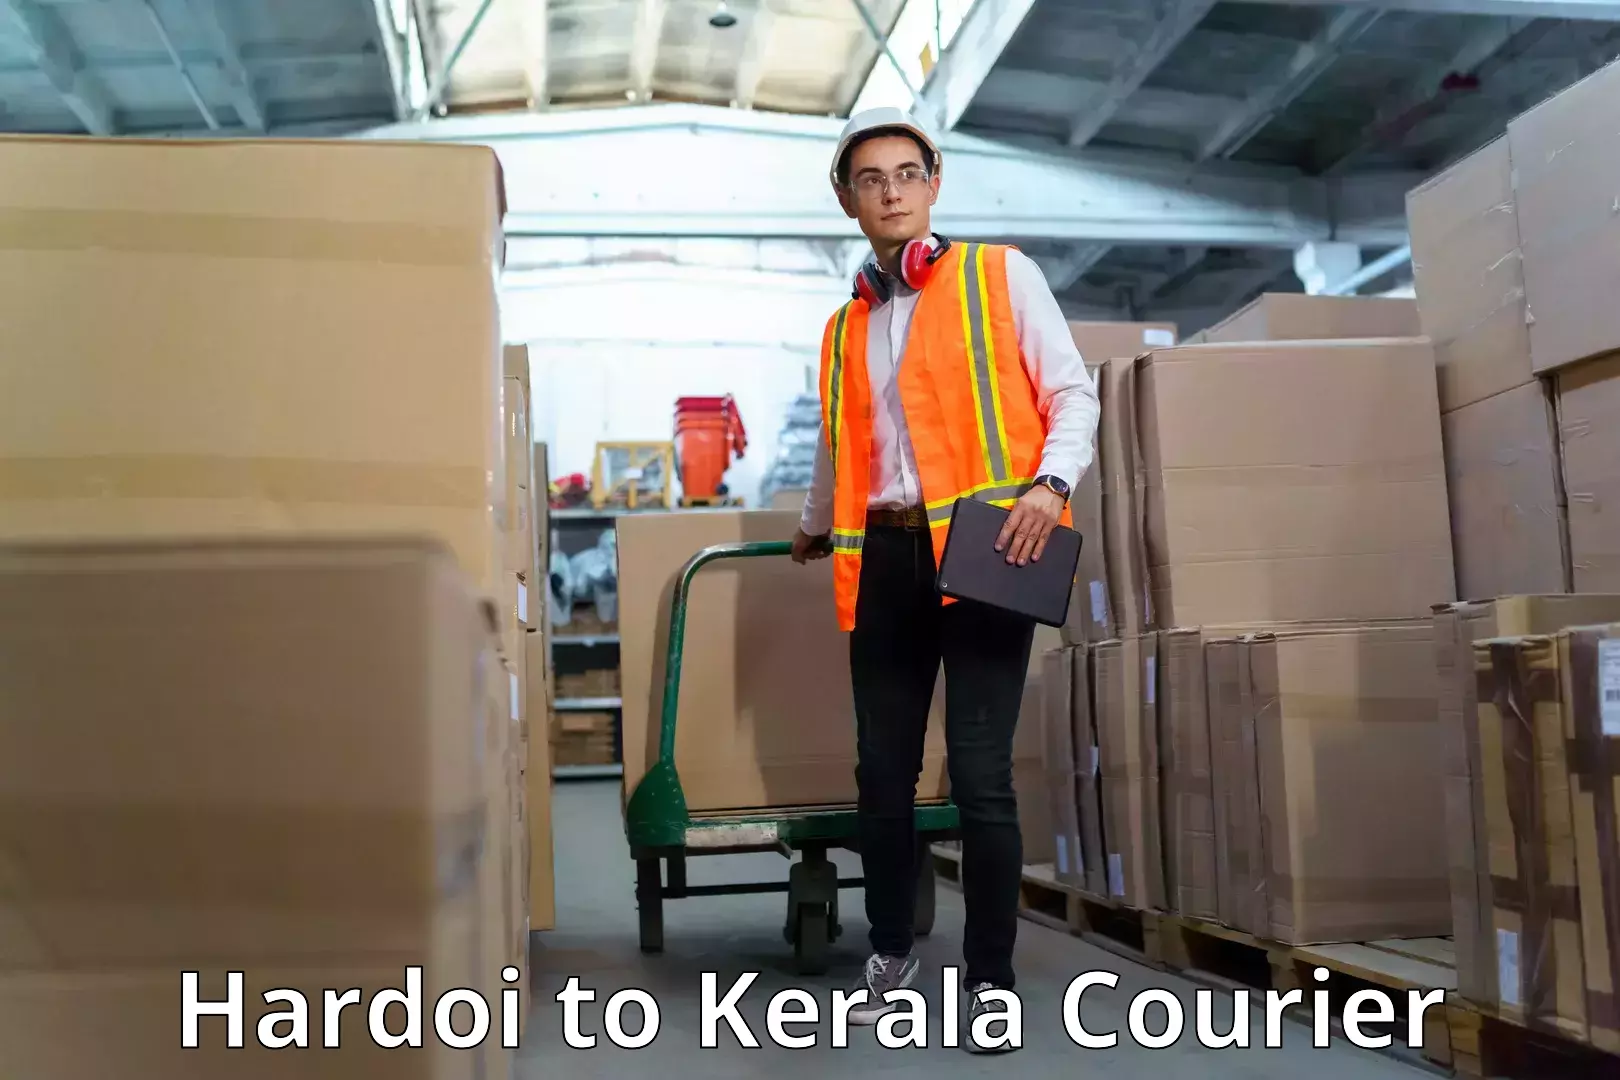 Reliable delivery network Hardoi to Kerala